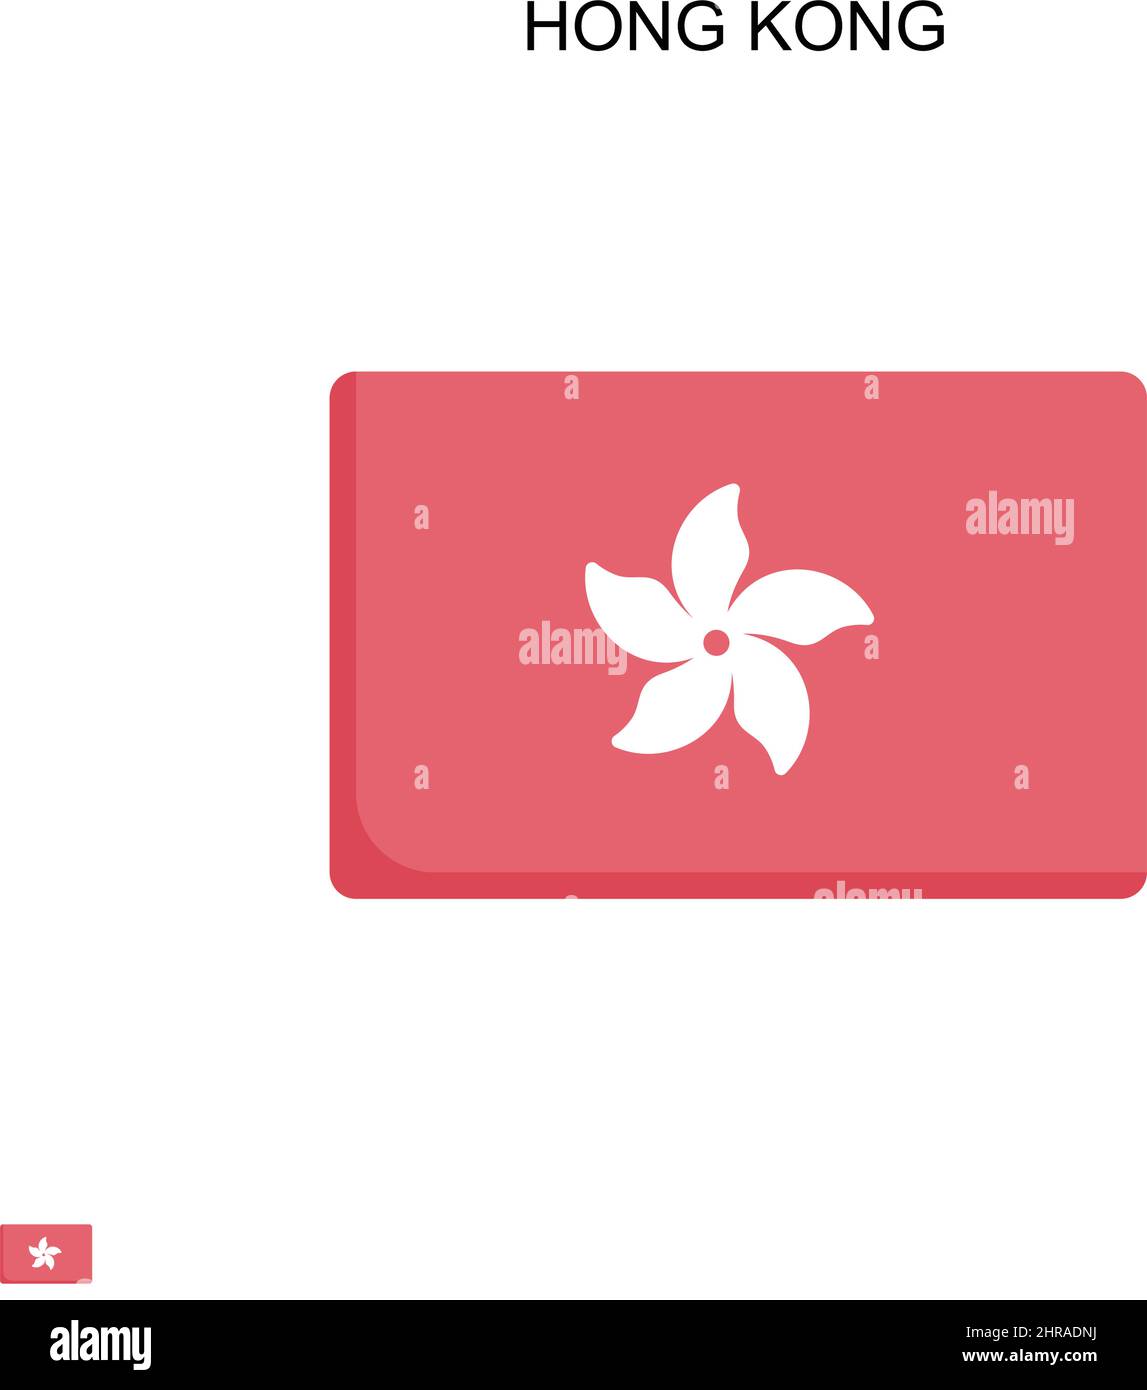 Einfaches Vektorsymbol Hongkong. Illustration Symbol Design-Vorlage für Web mobile UI-Element. Stock Vektor